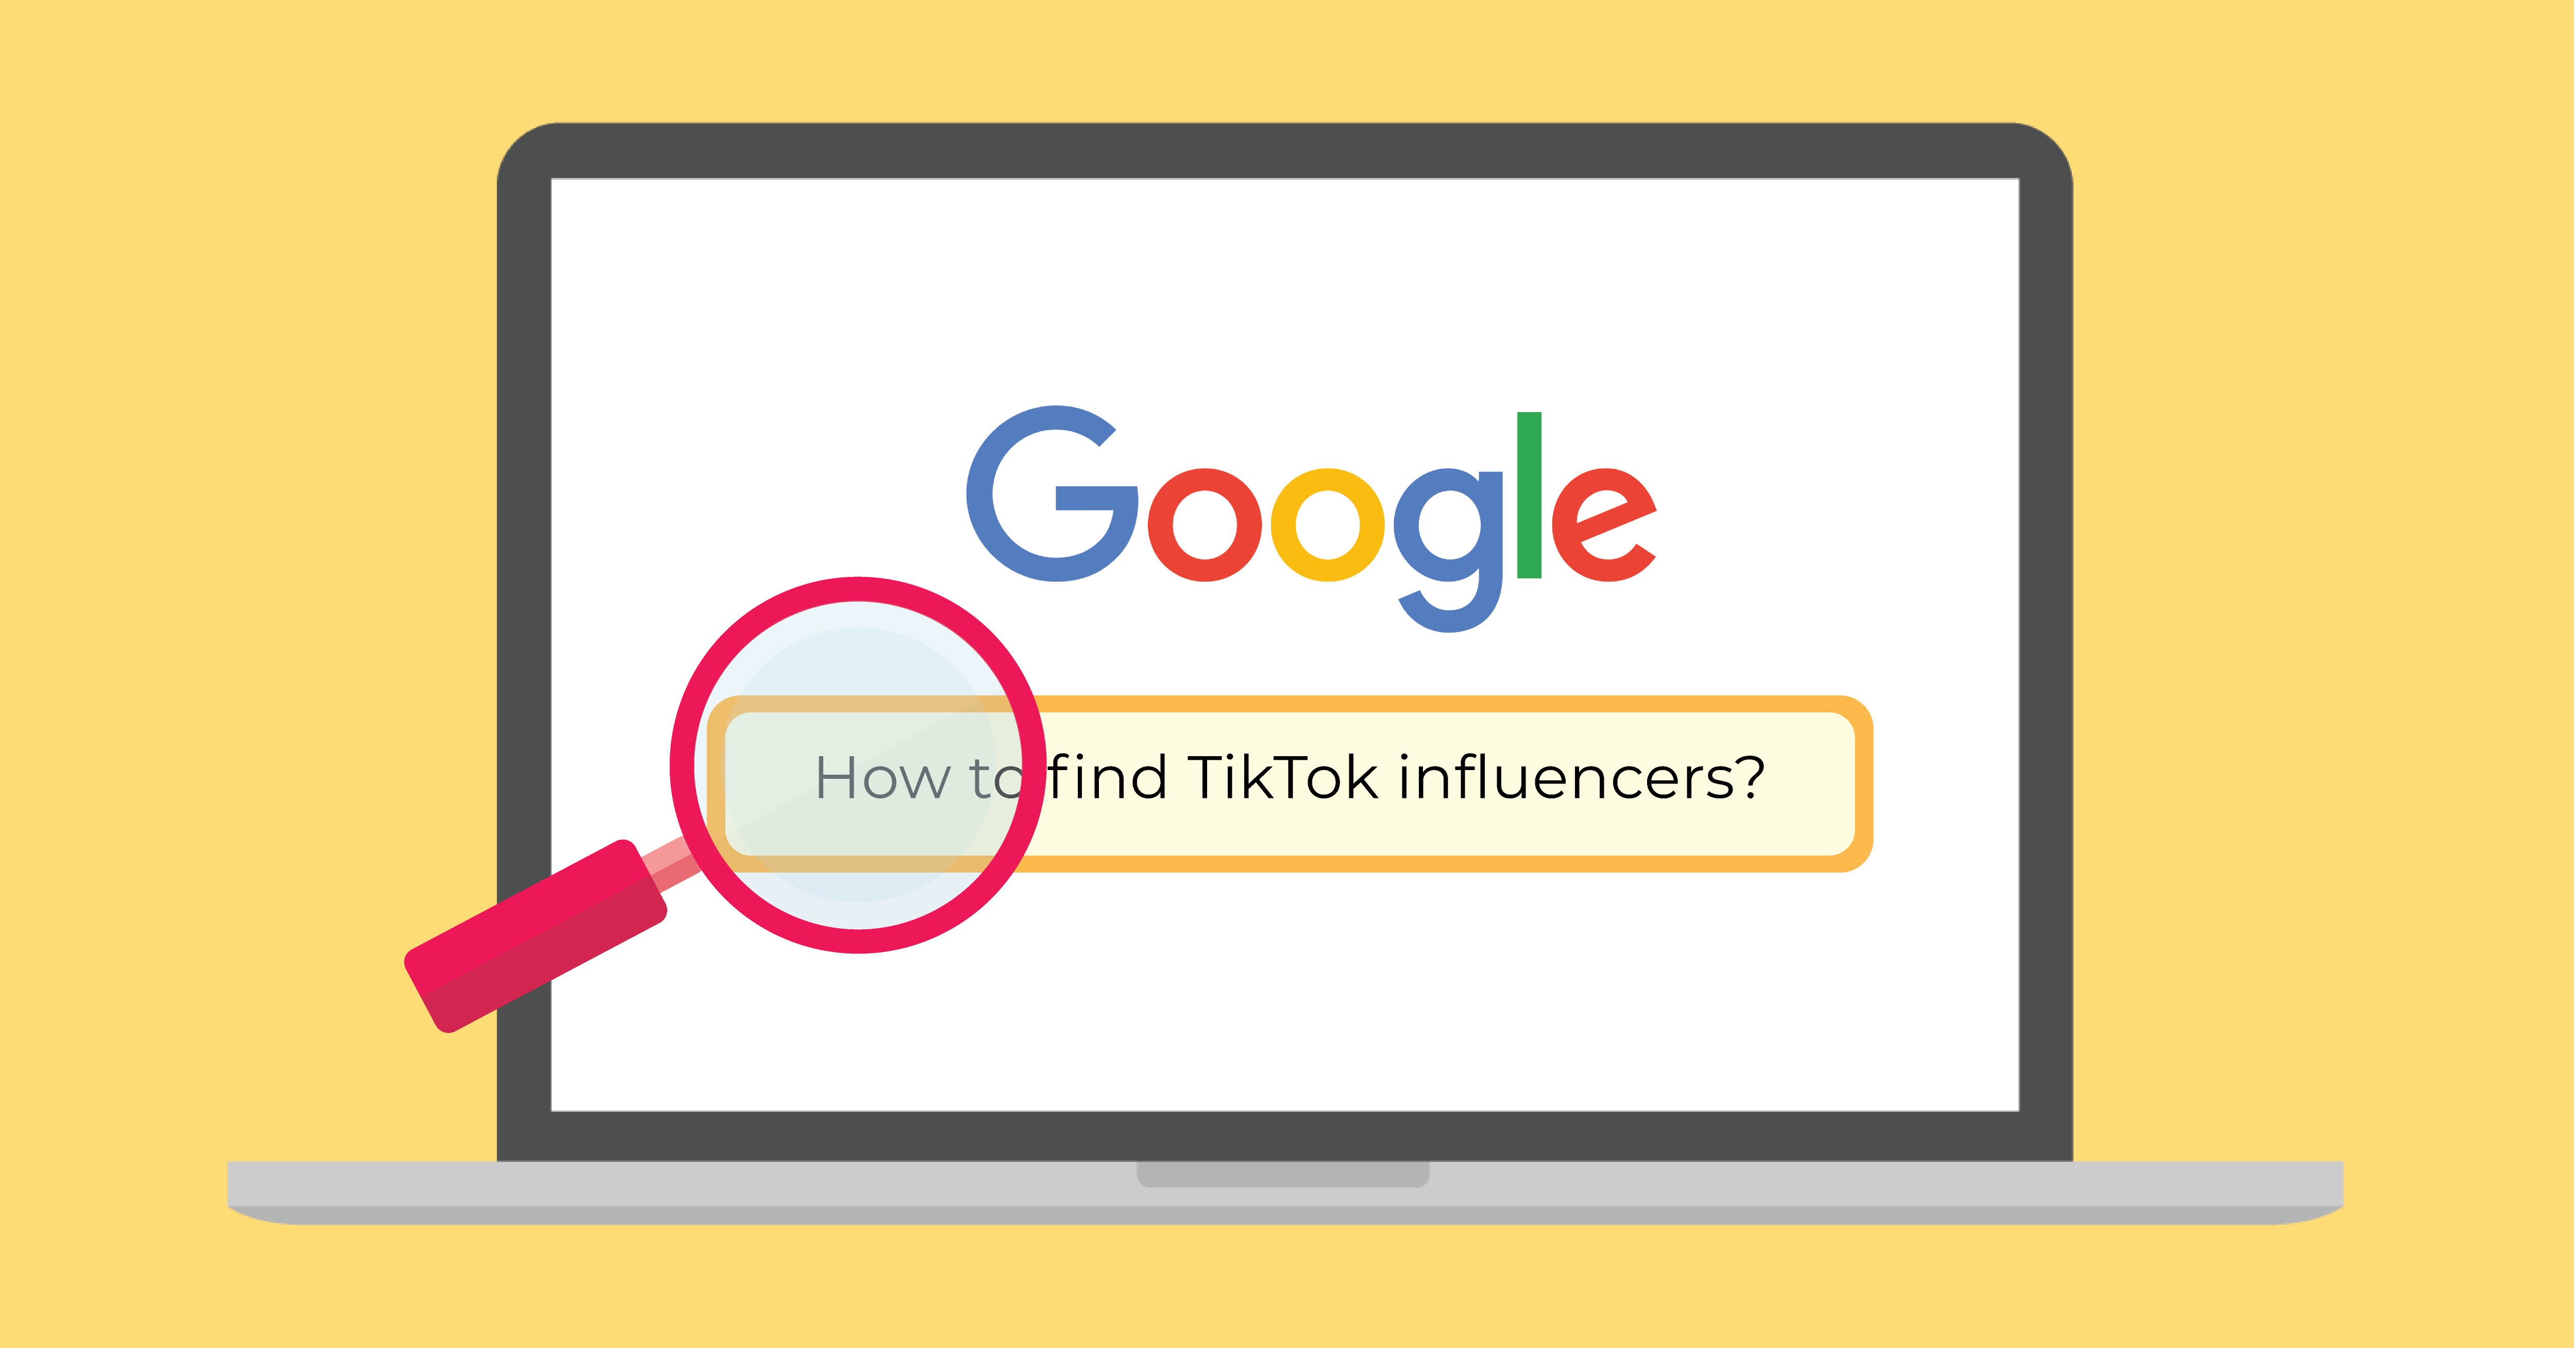 3 ways to find TikTok influencers